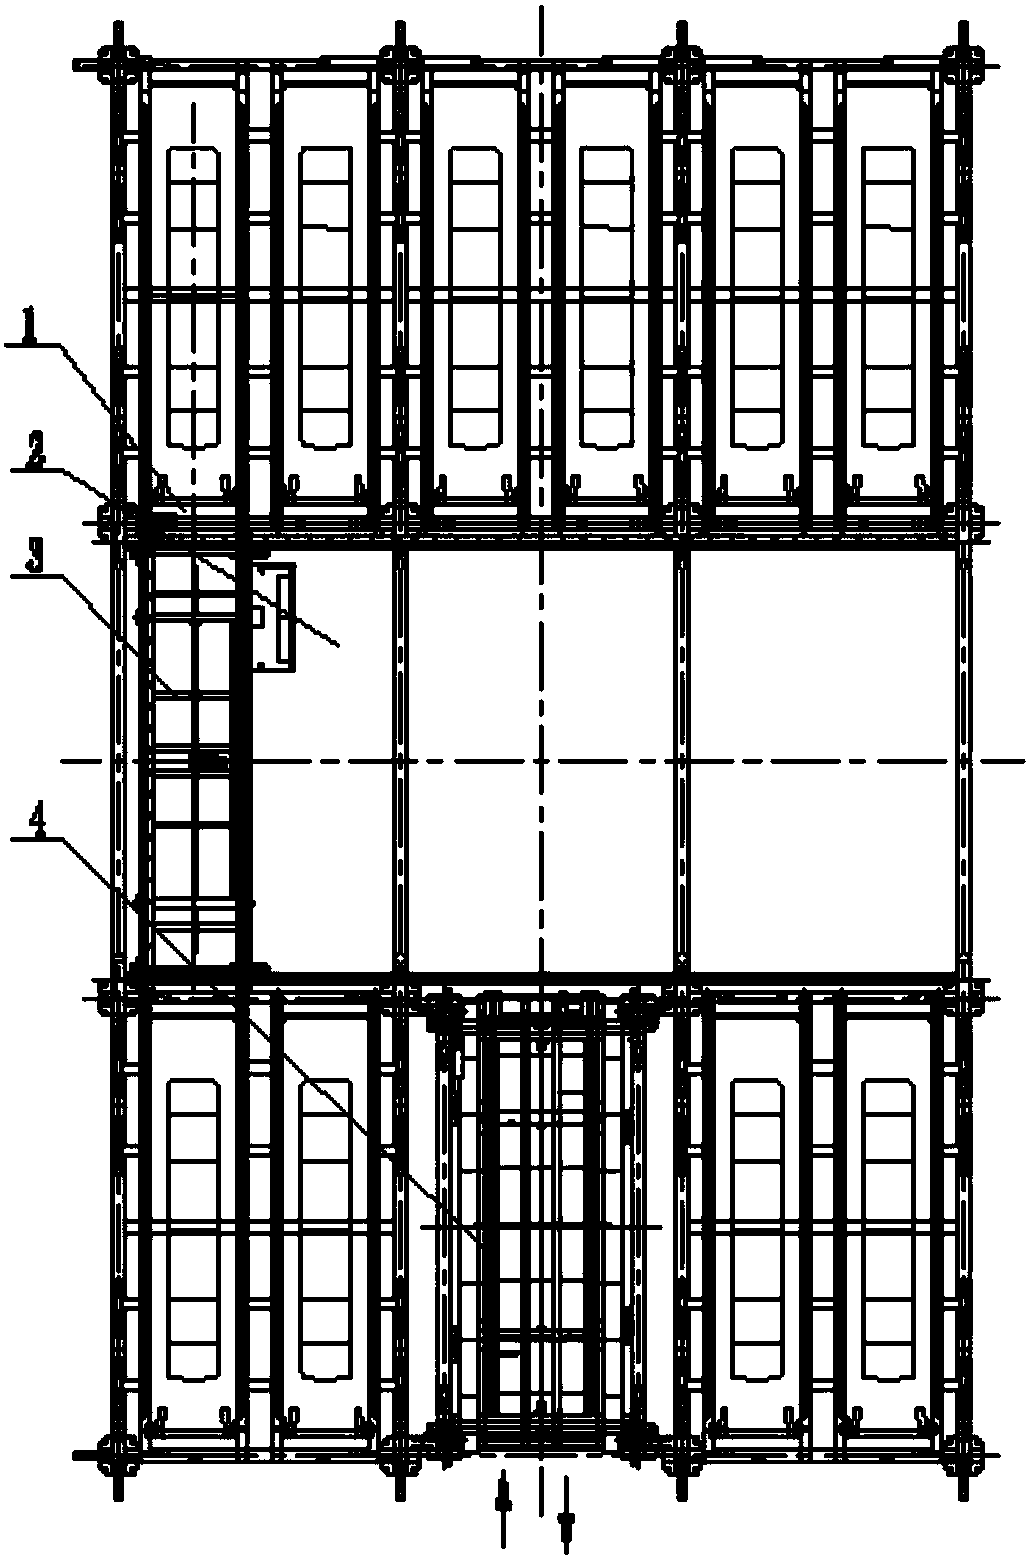 Mechanical three-dimensional parking garage